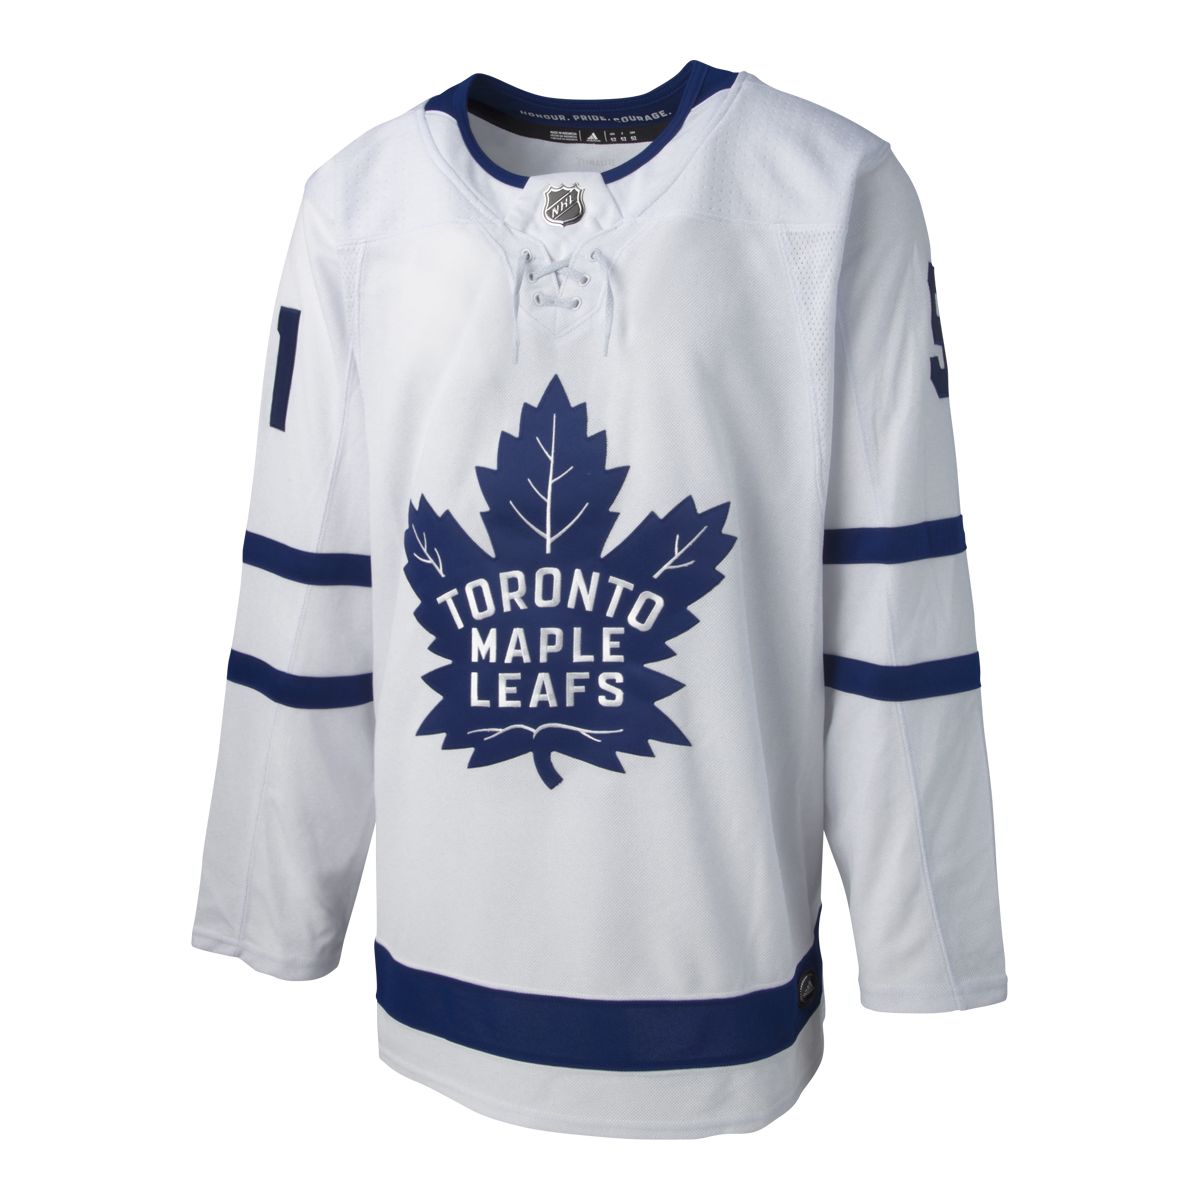 ADIDAS Toronto Maple Leafs adidas John Tavares Jersey Hockey NHL Willowbrook Shopping Centre